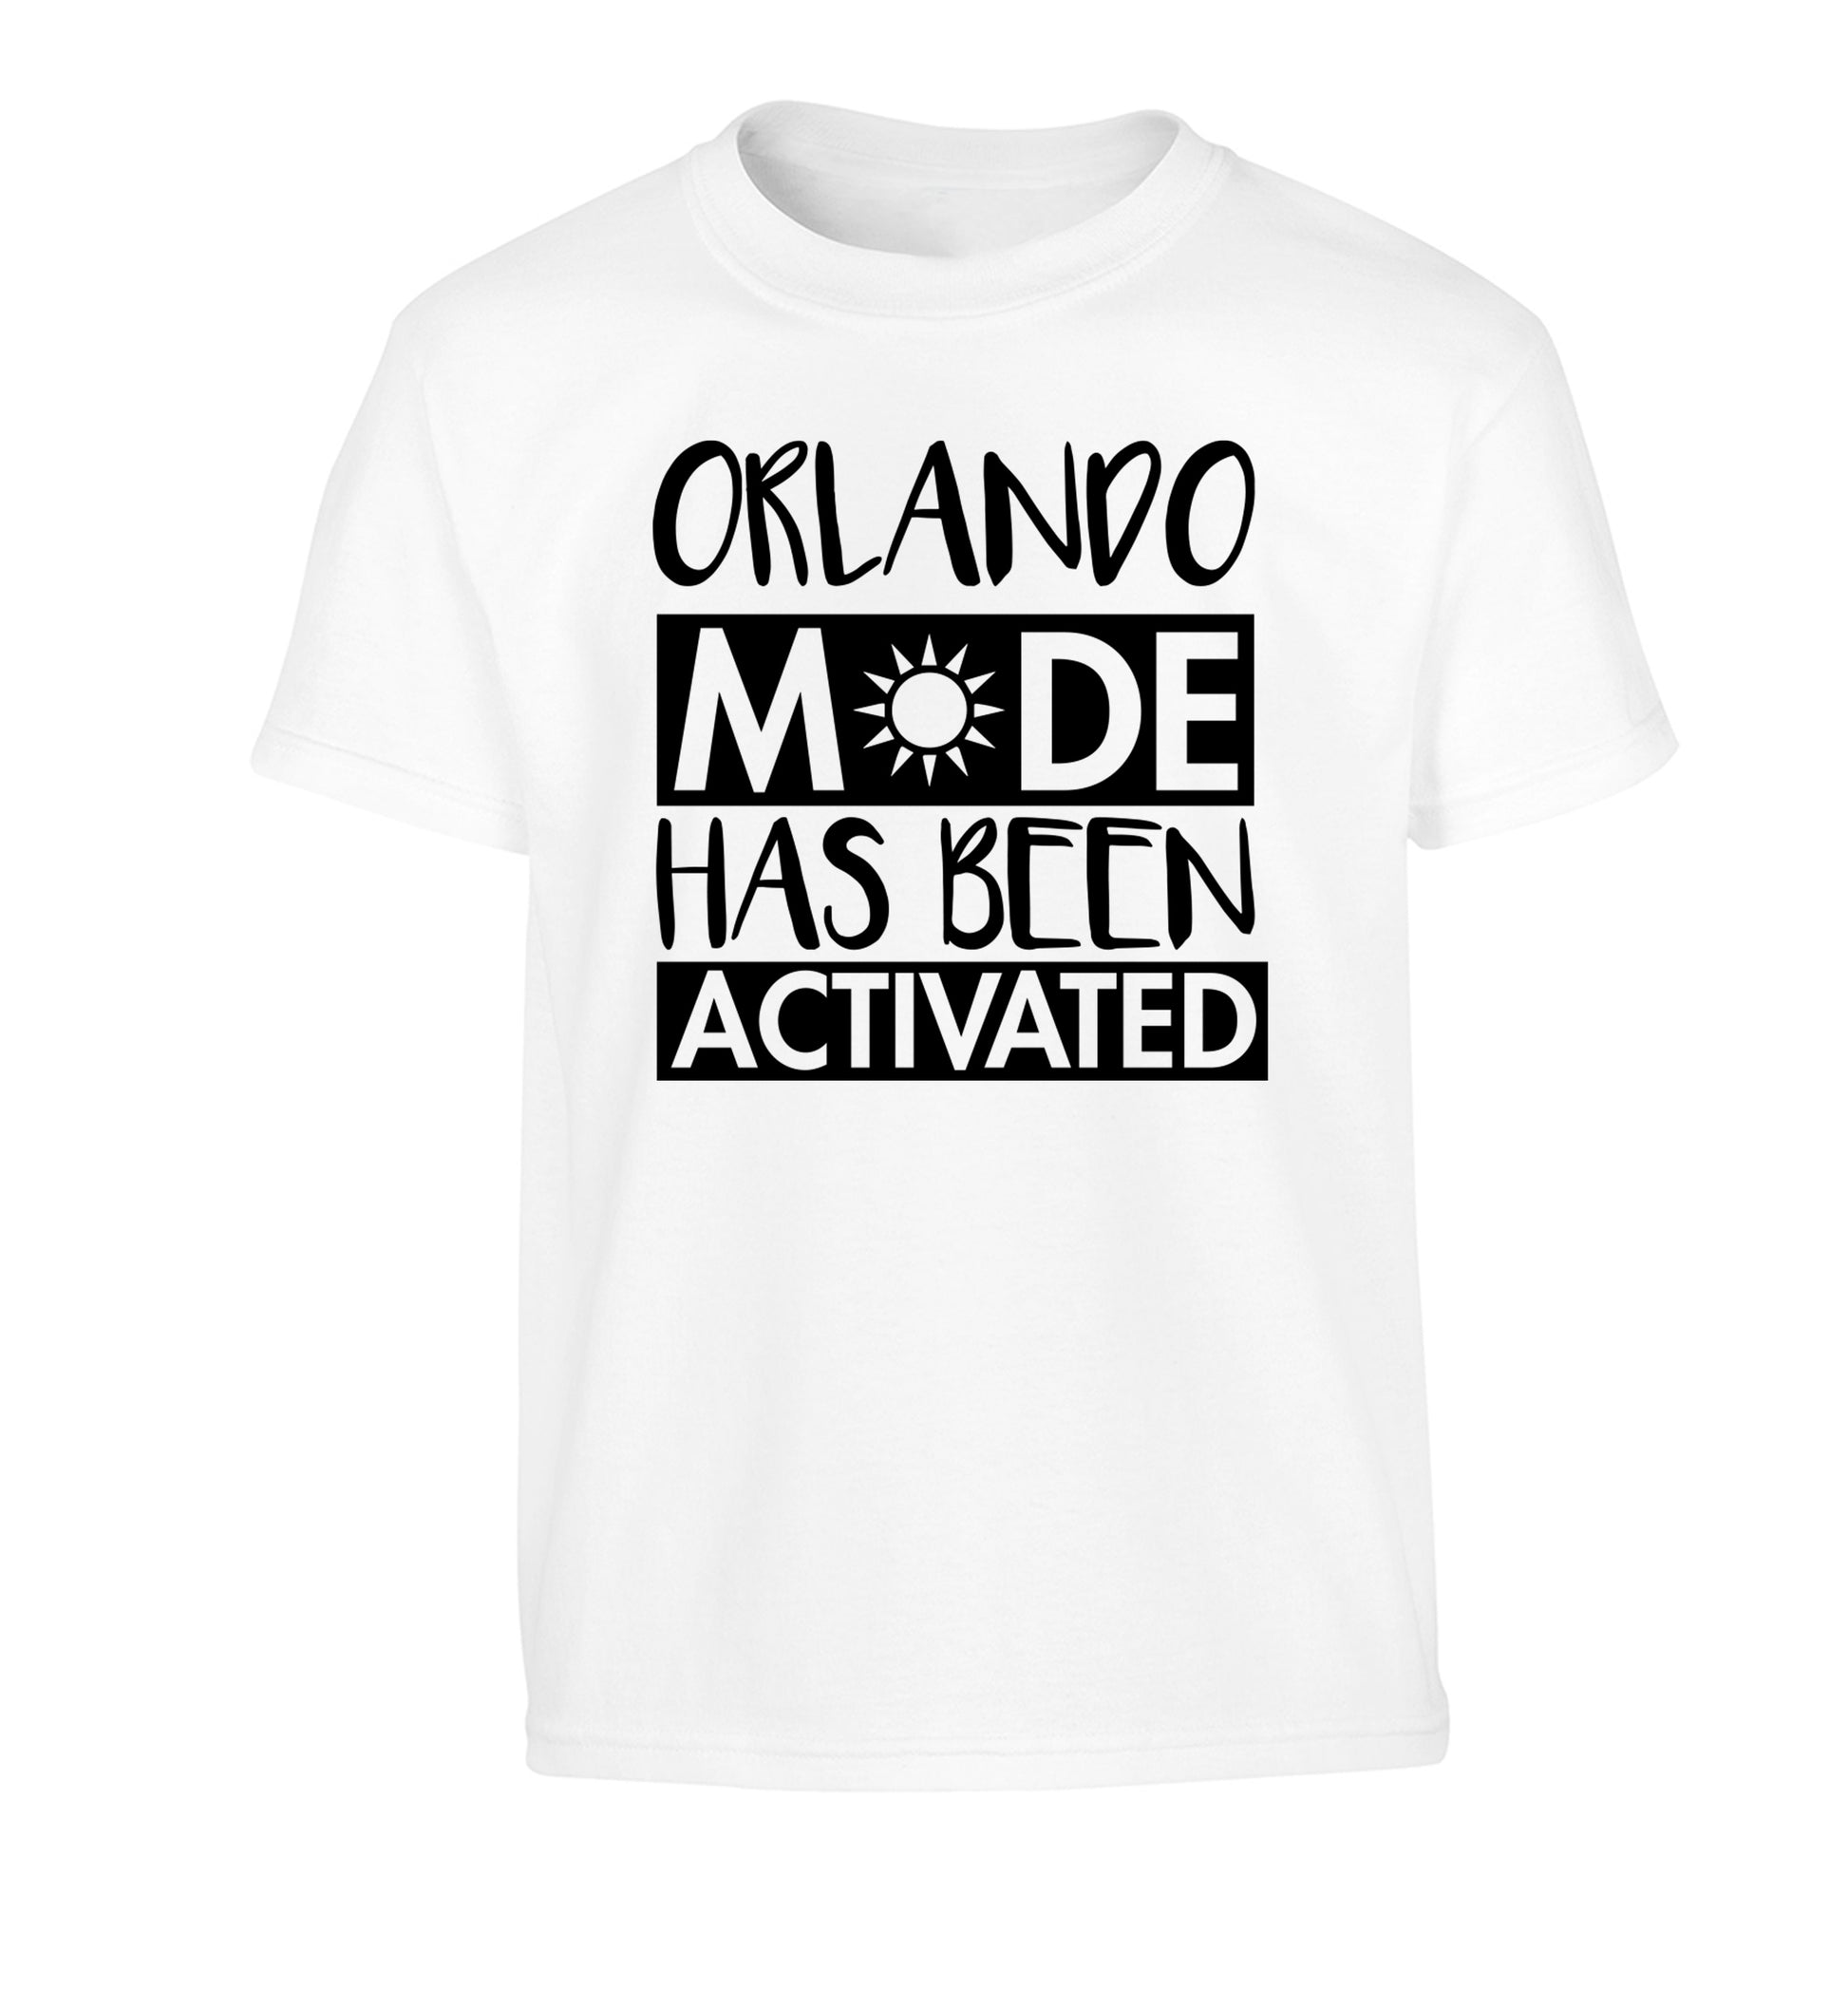 Orlando mode has been activated Children's white Tshirt 12-13 Years